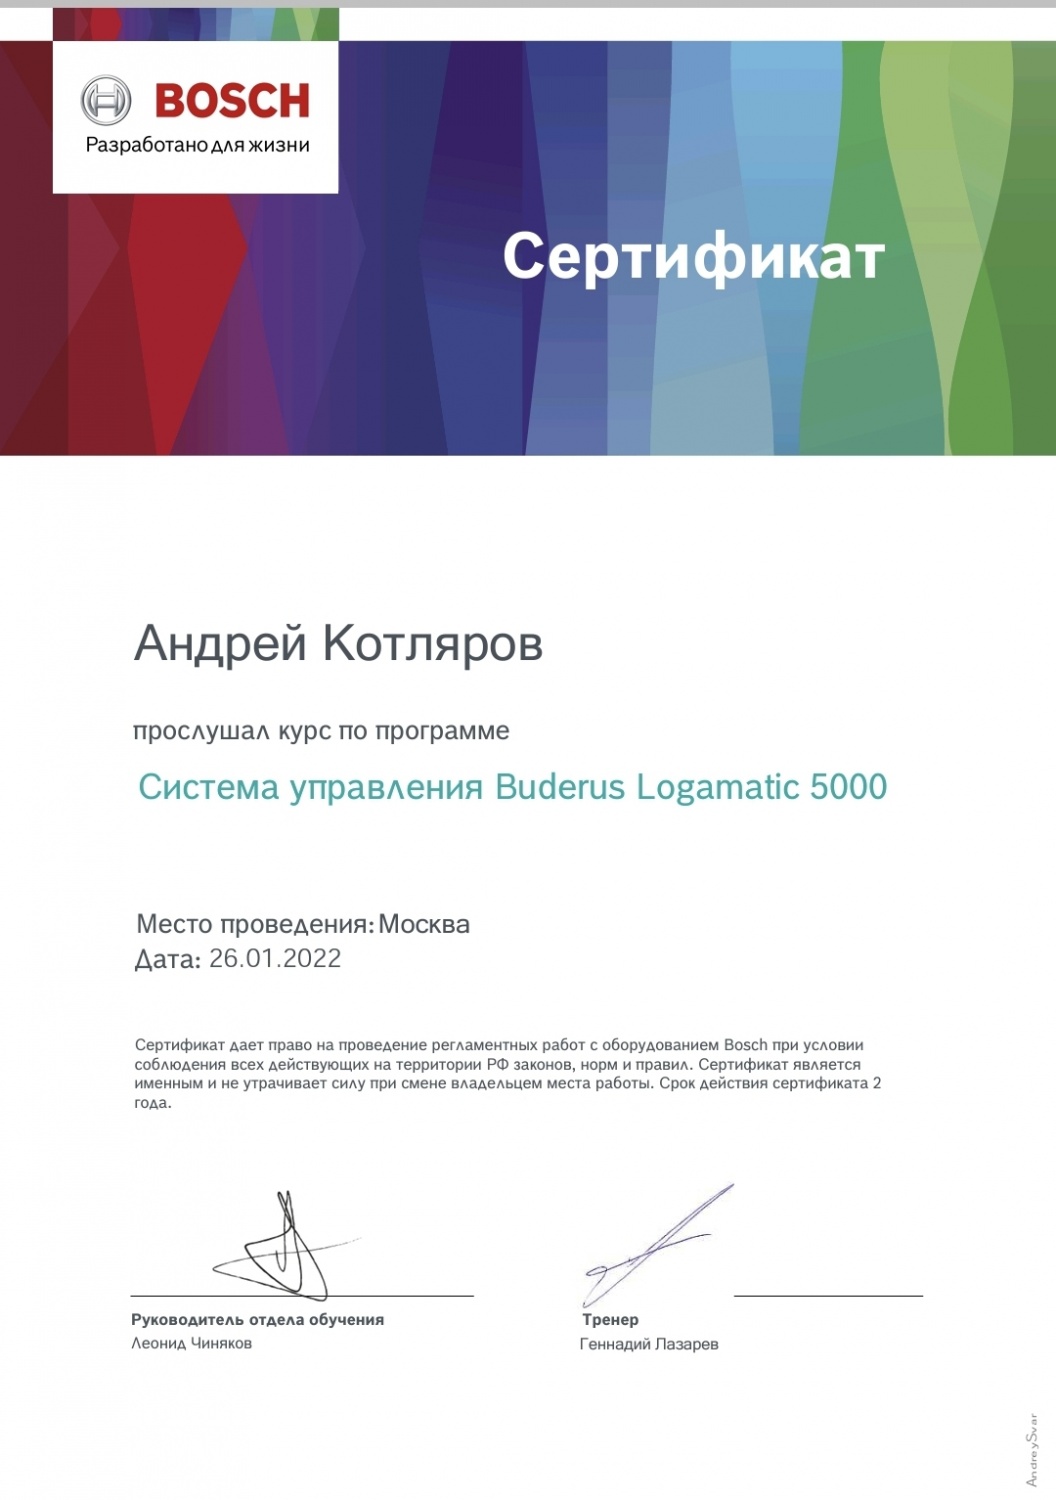 Сертификат Buderus logamatik 5000